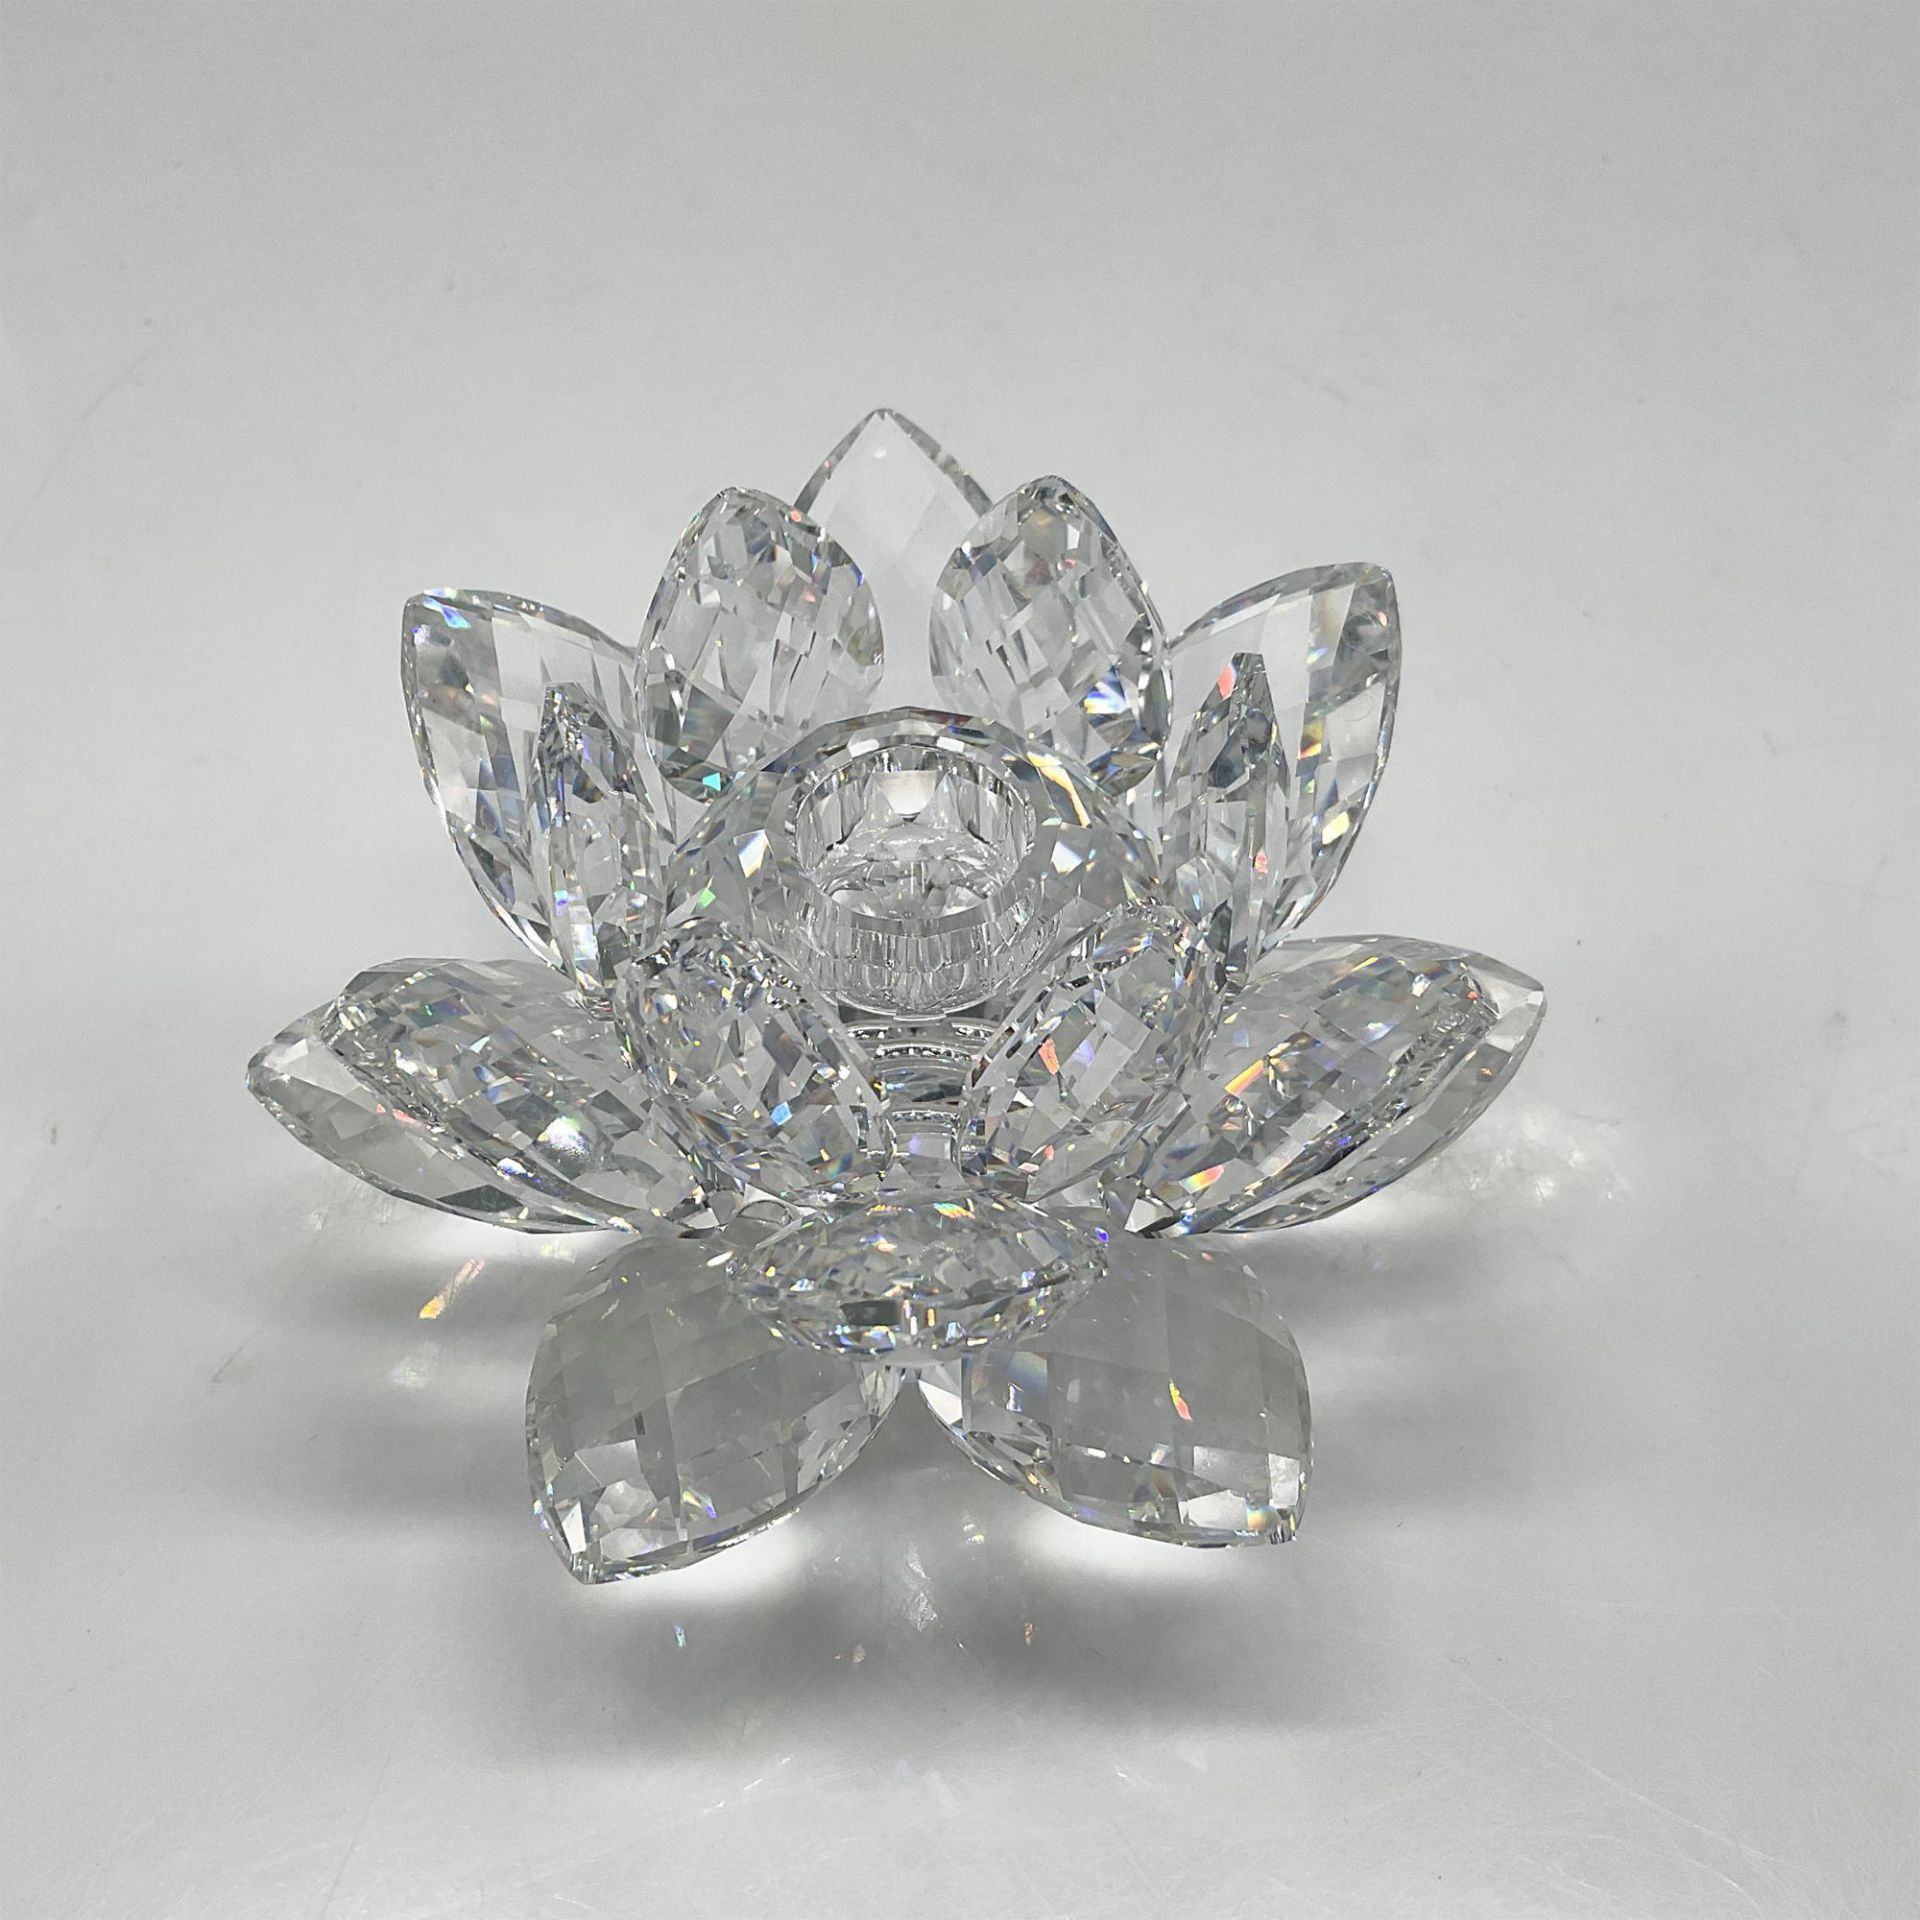 Swarovski Silver Crystal Candleholder, Medium Waterlily - Image 2 of 4